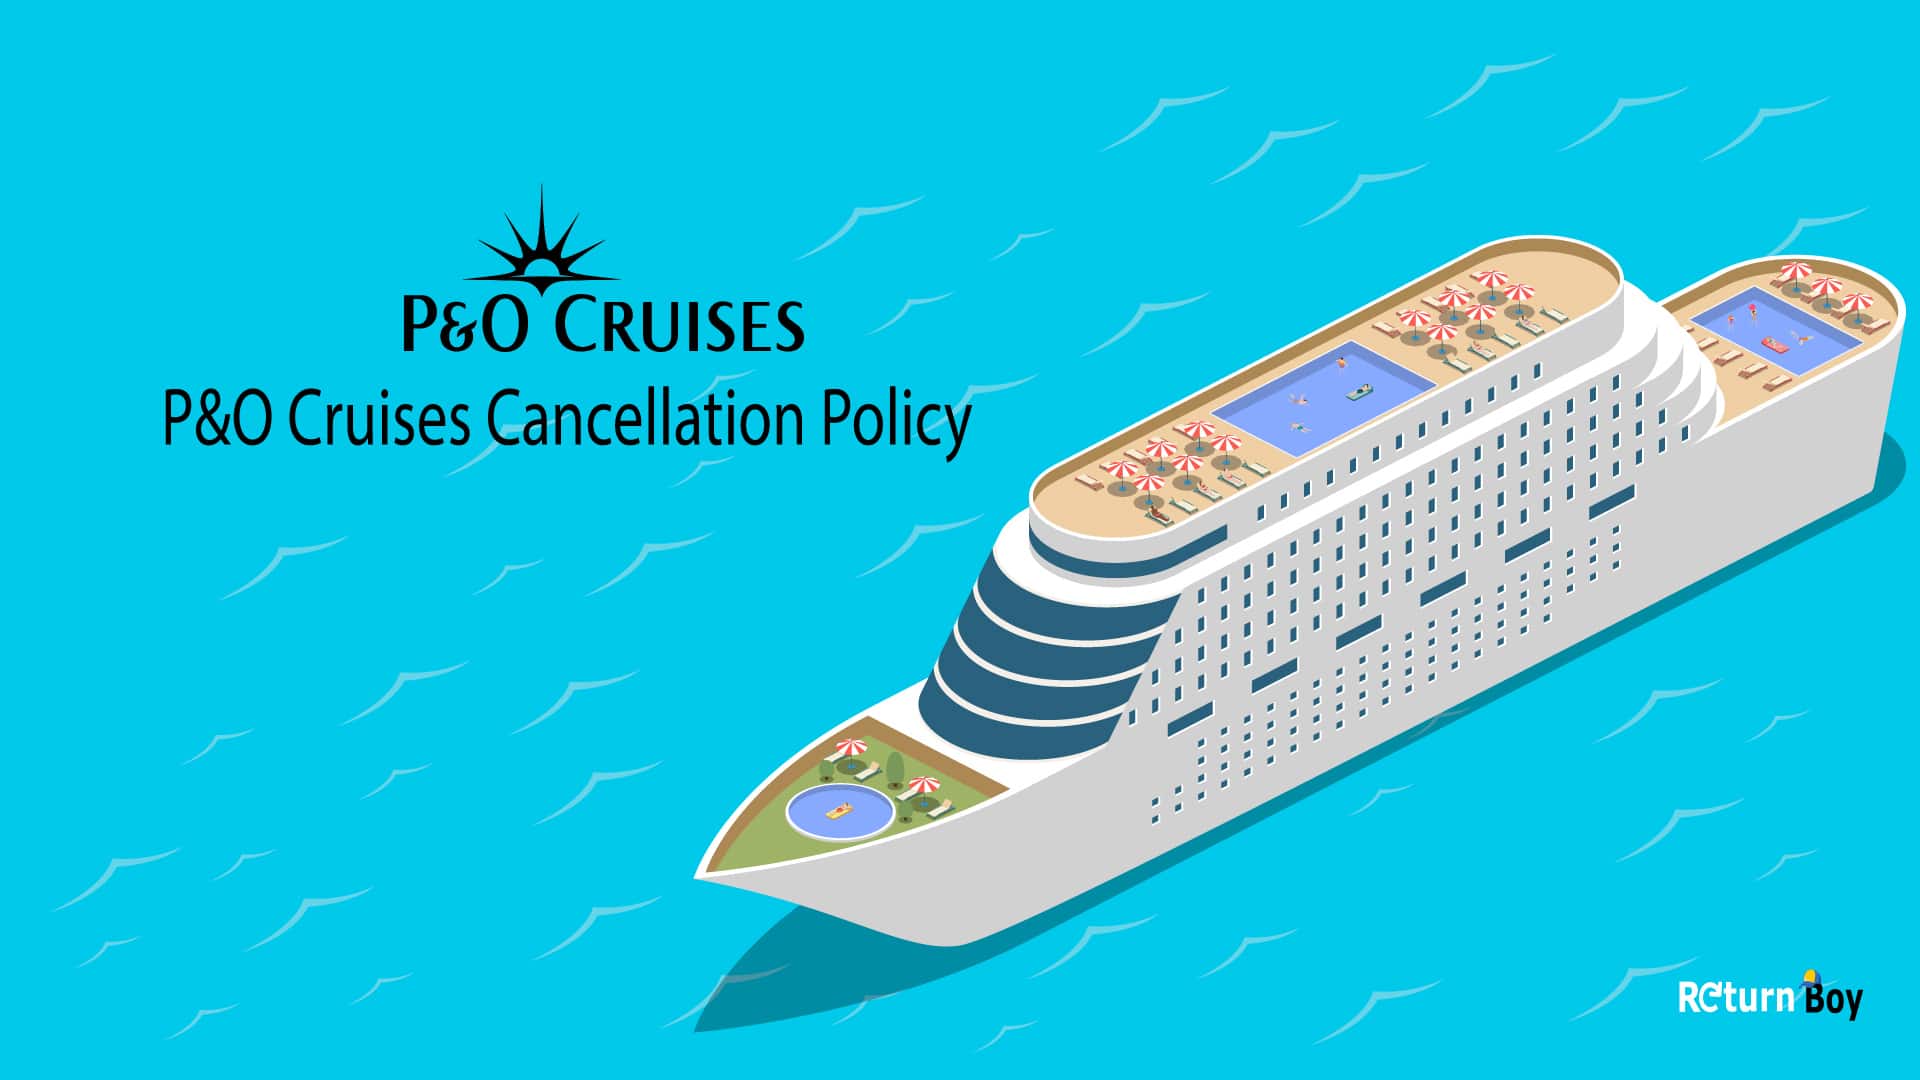 P&O Cruises cancellation policy